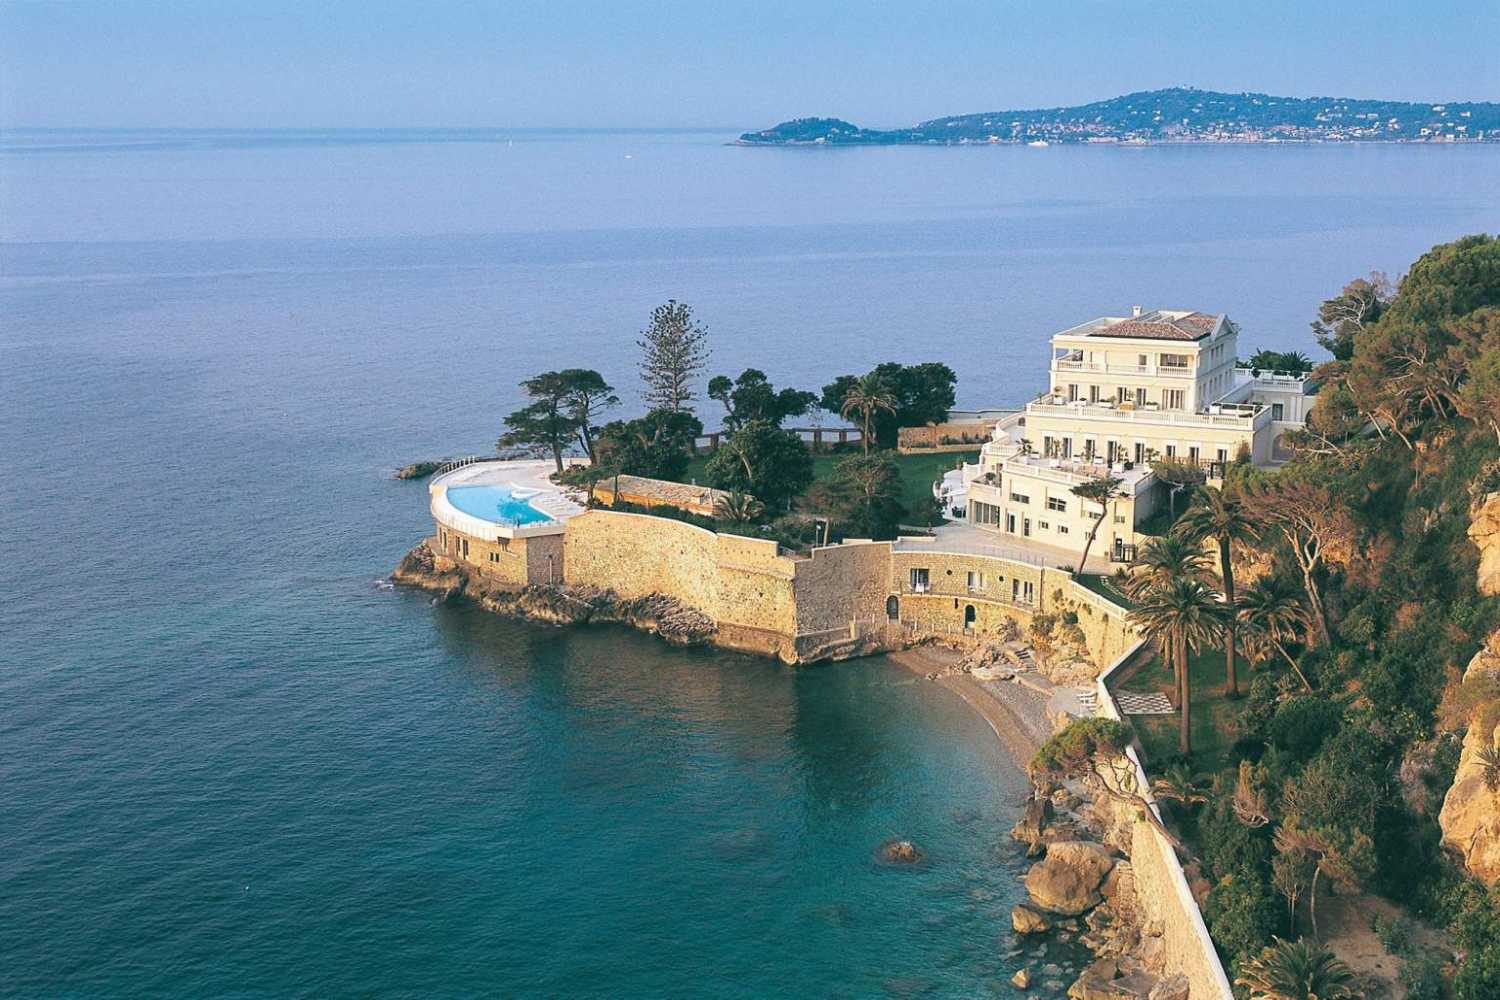 Hotel Cap Estel Eze, Cote d'Azur - France